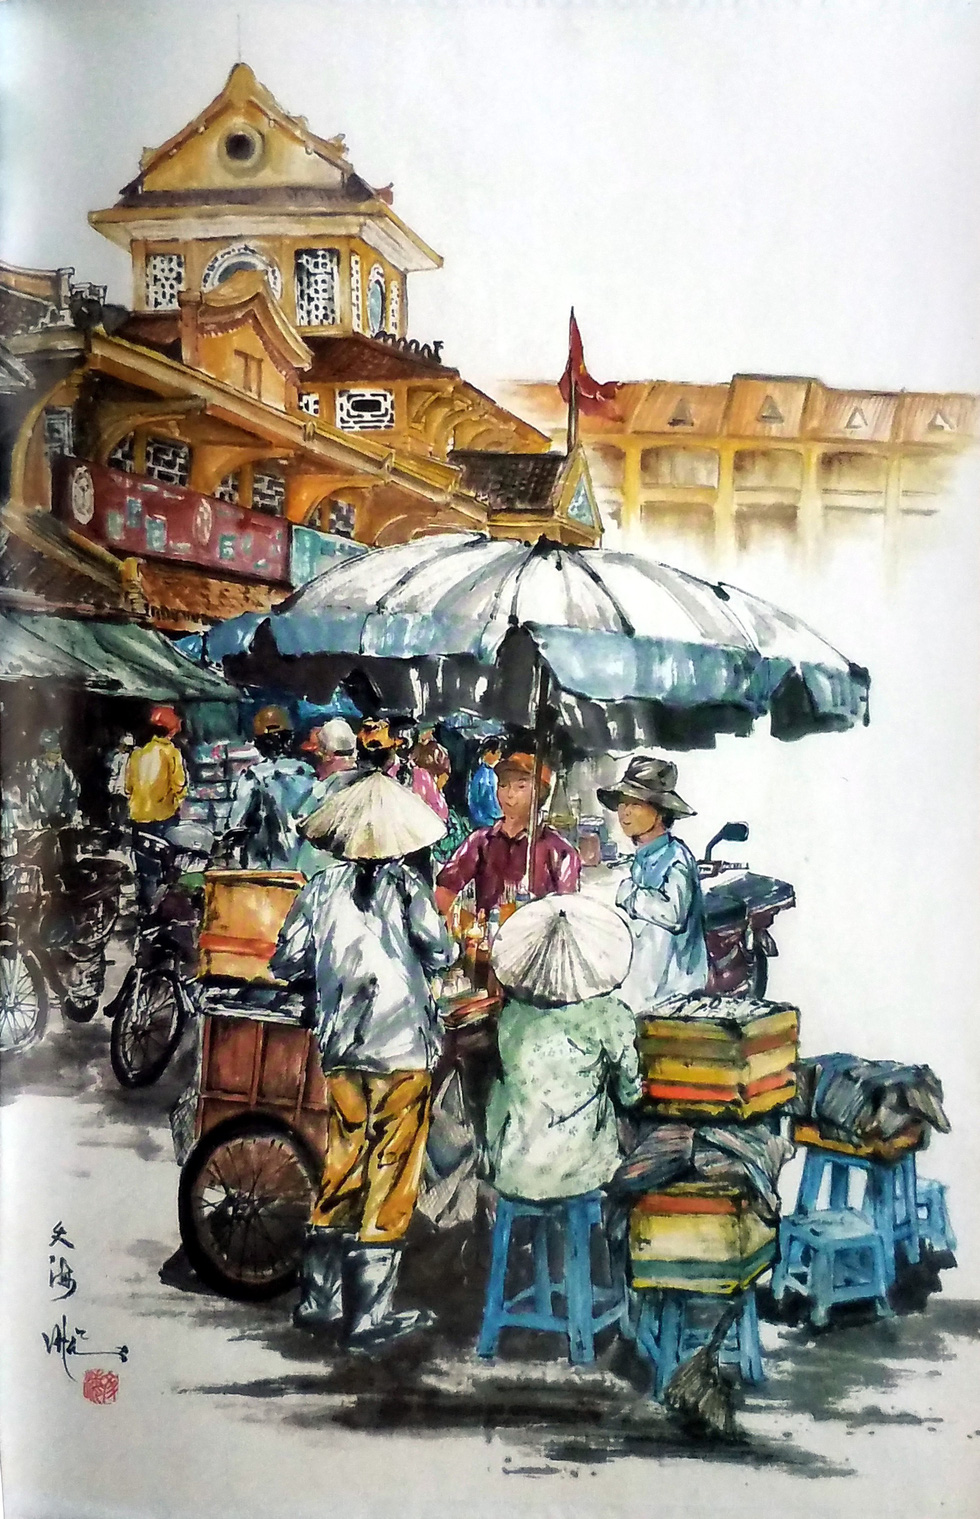 The painting Goc cho Binh Tay (A corner of Binh Tay Market) by artist Tran Van Hai